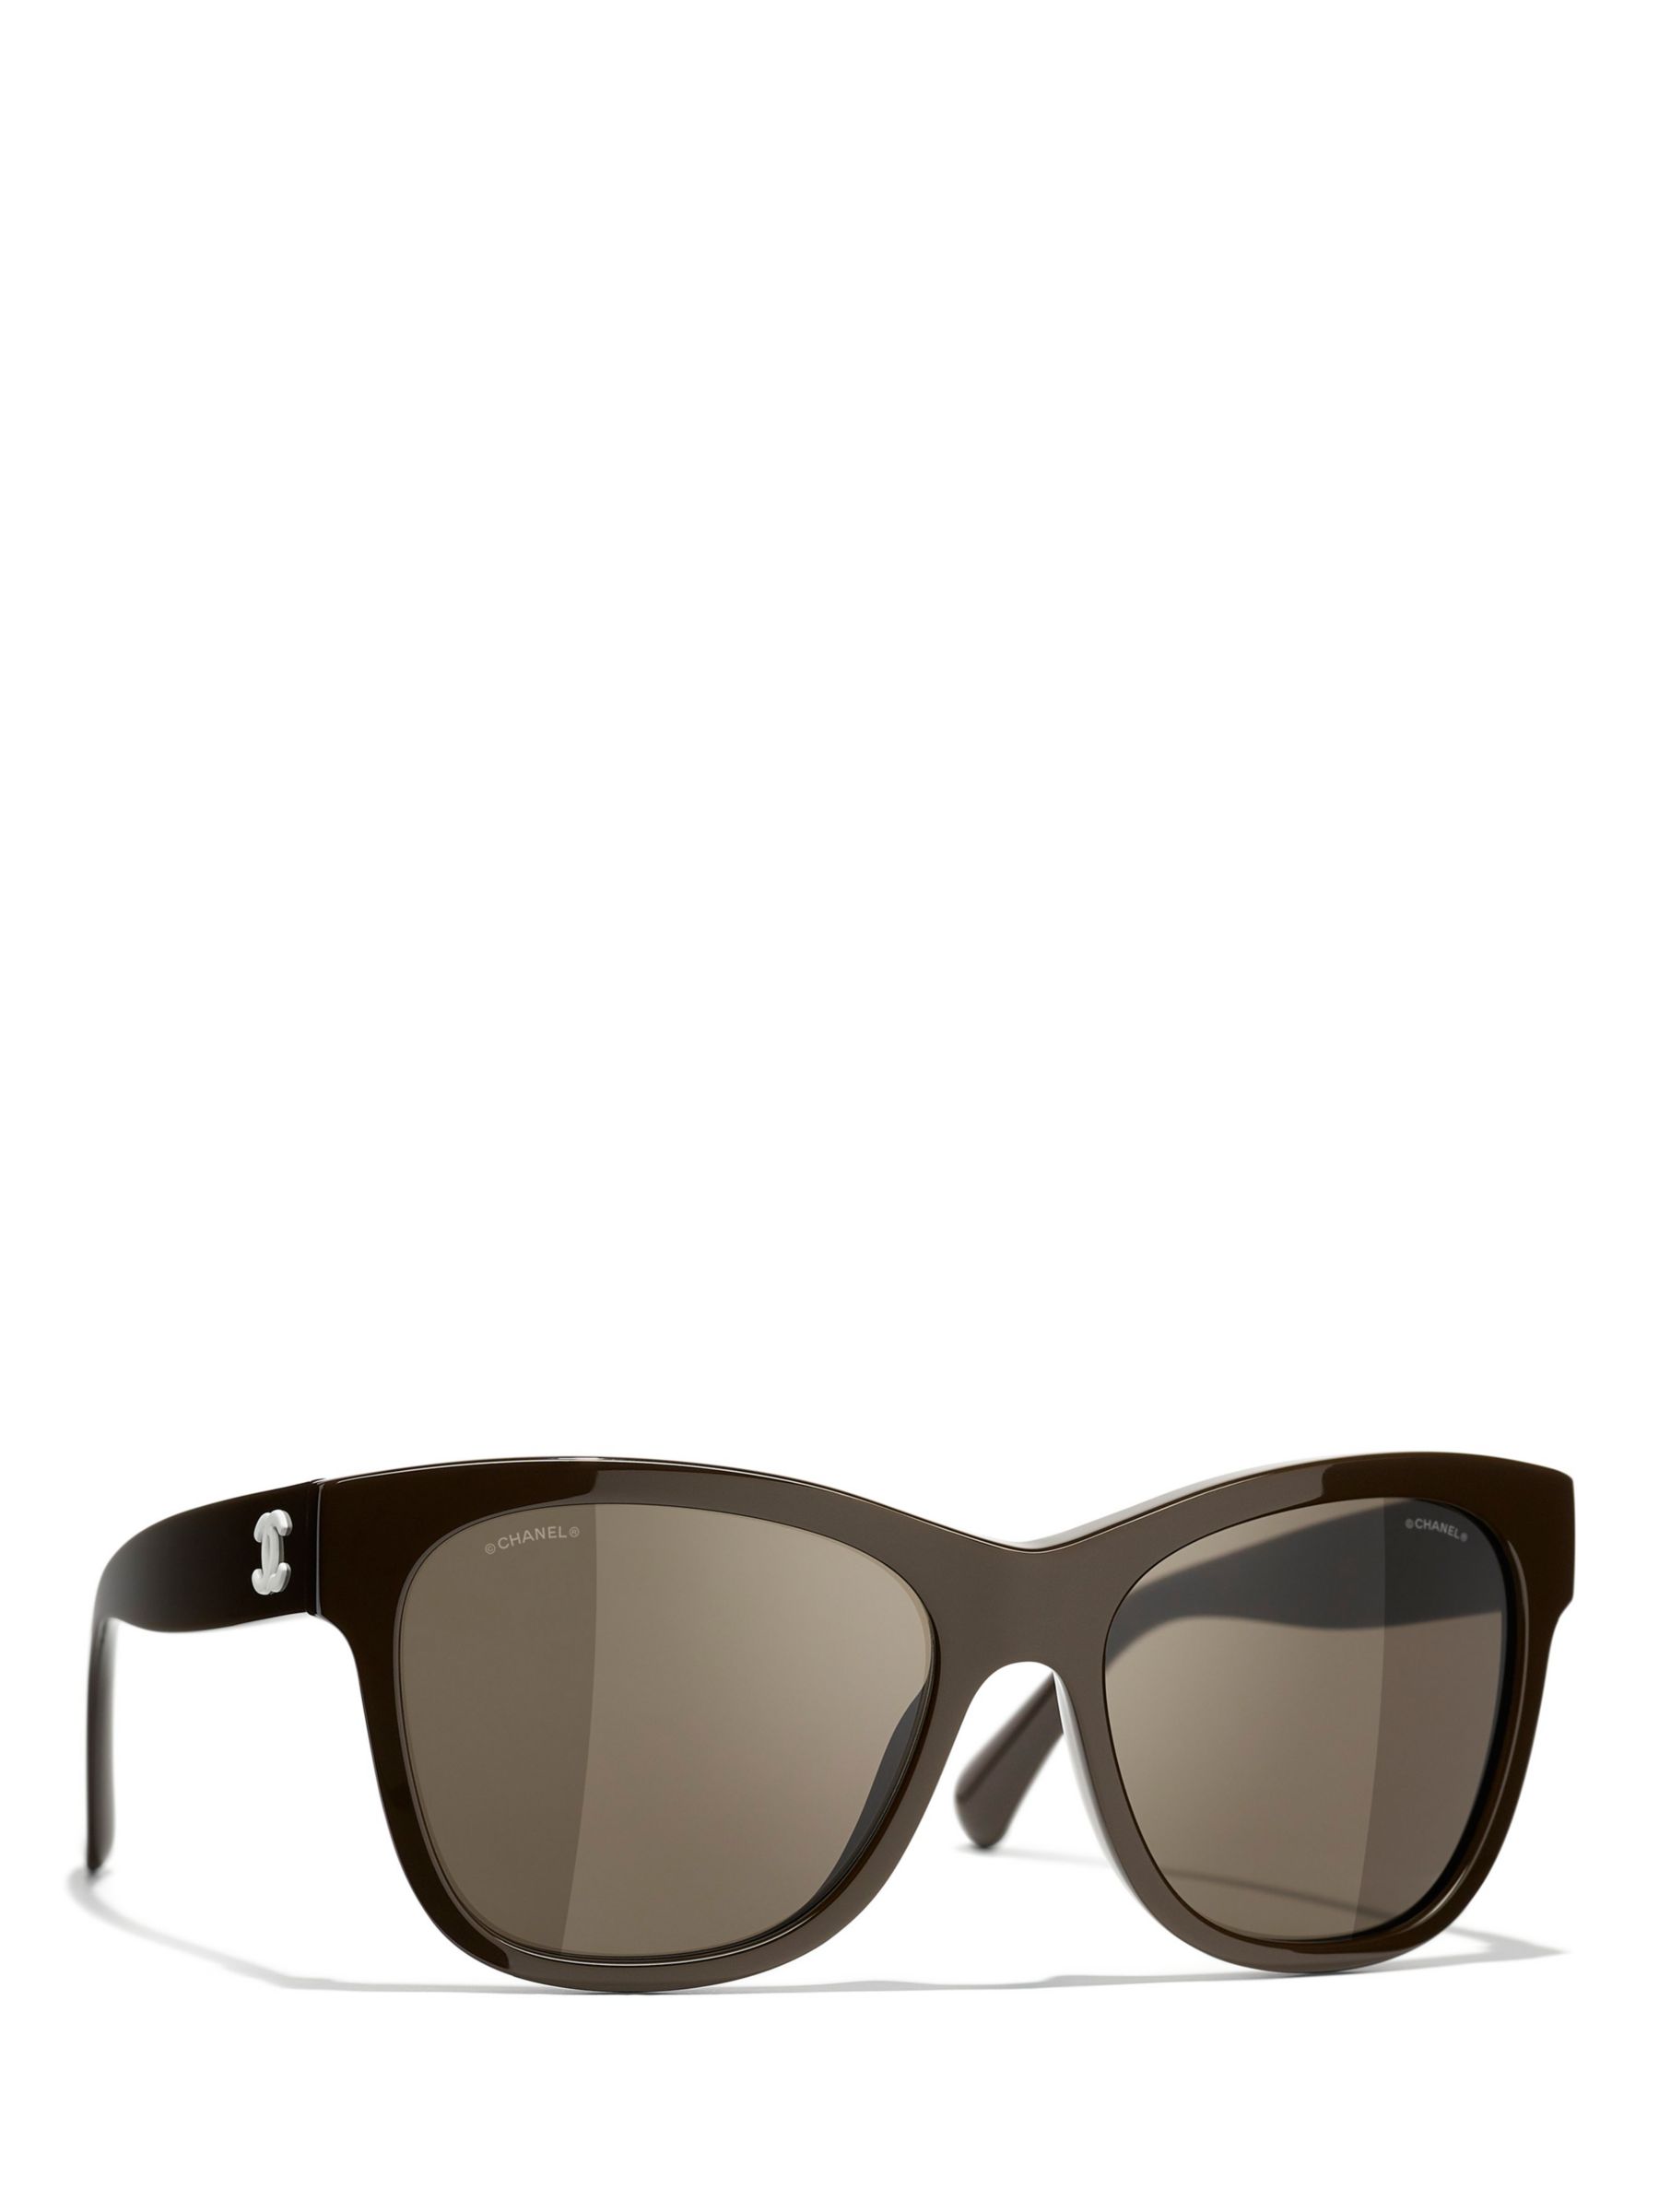 CHANEL Acetate Polarized Square CC Sunglasses 5380 Black 1020793